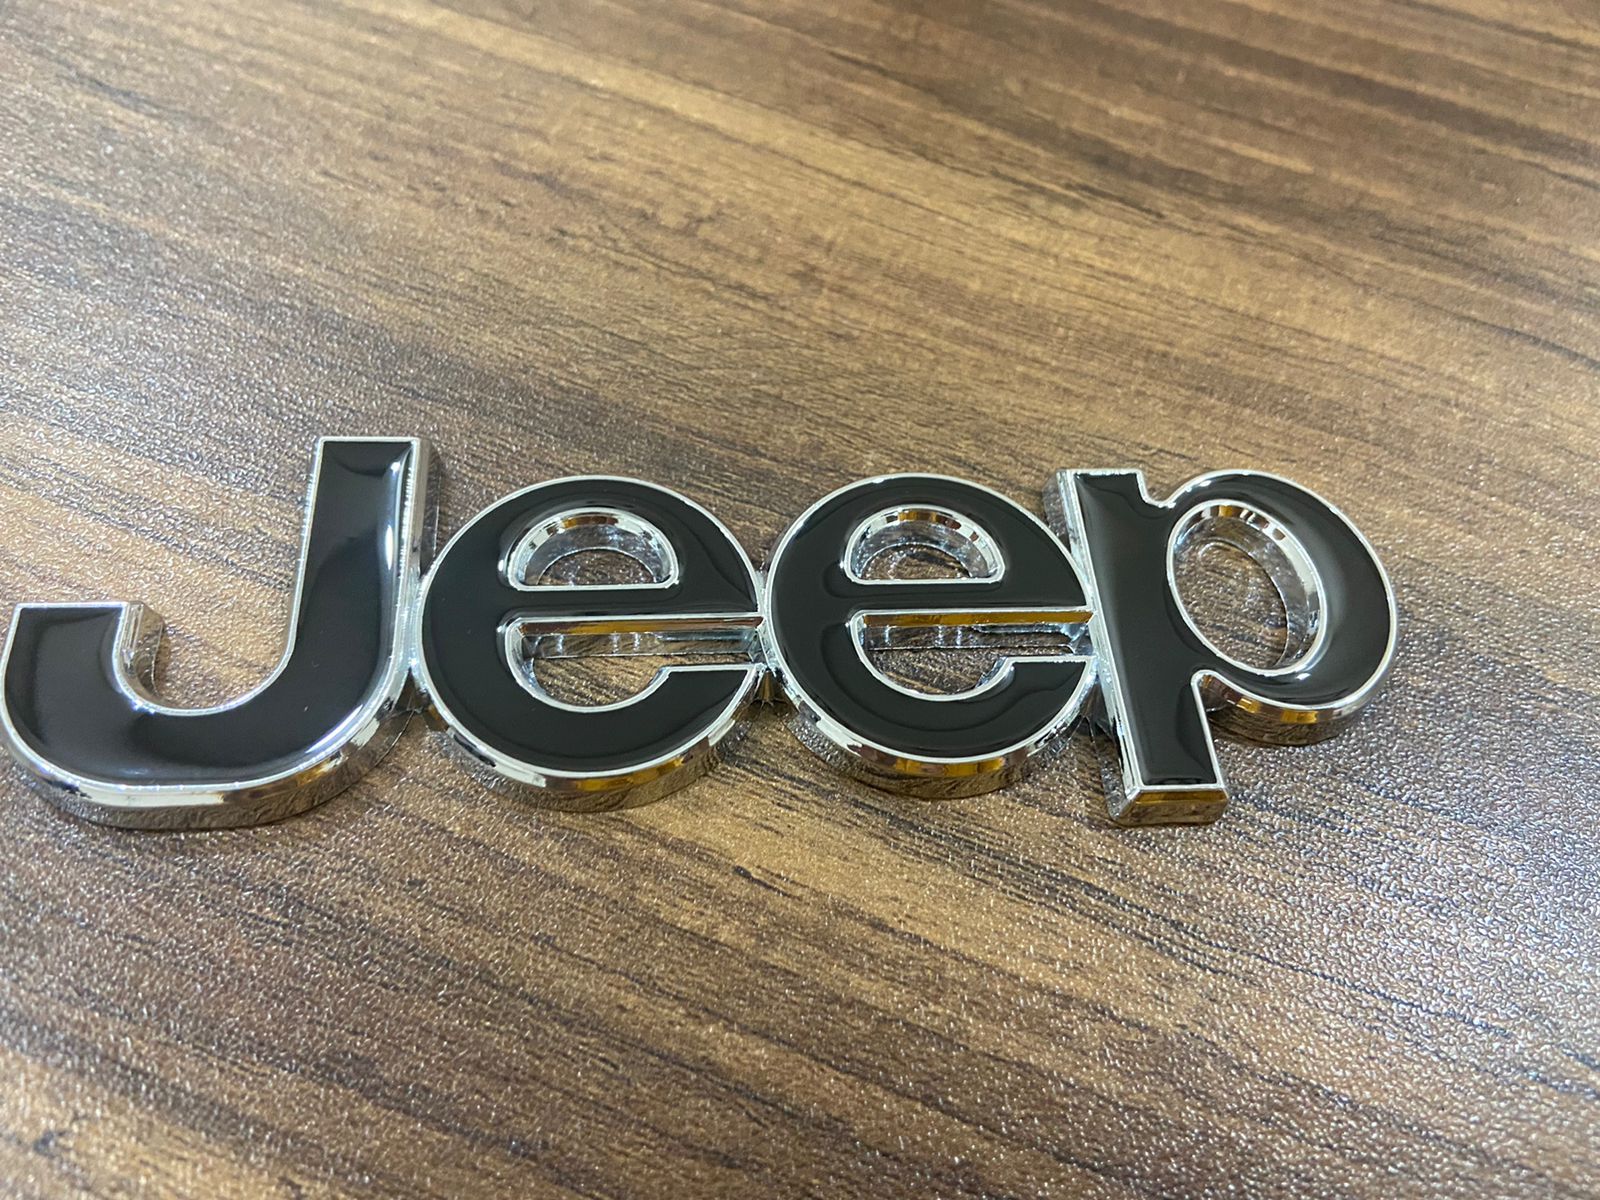 1 Pc Auto Car Decoration Stickers Jeep Logo Emblem Badge For Jeep Wrangler Cherokee Grand Cherokee Compass Car Sticker Car Accessories